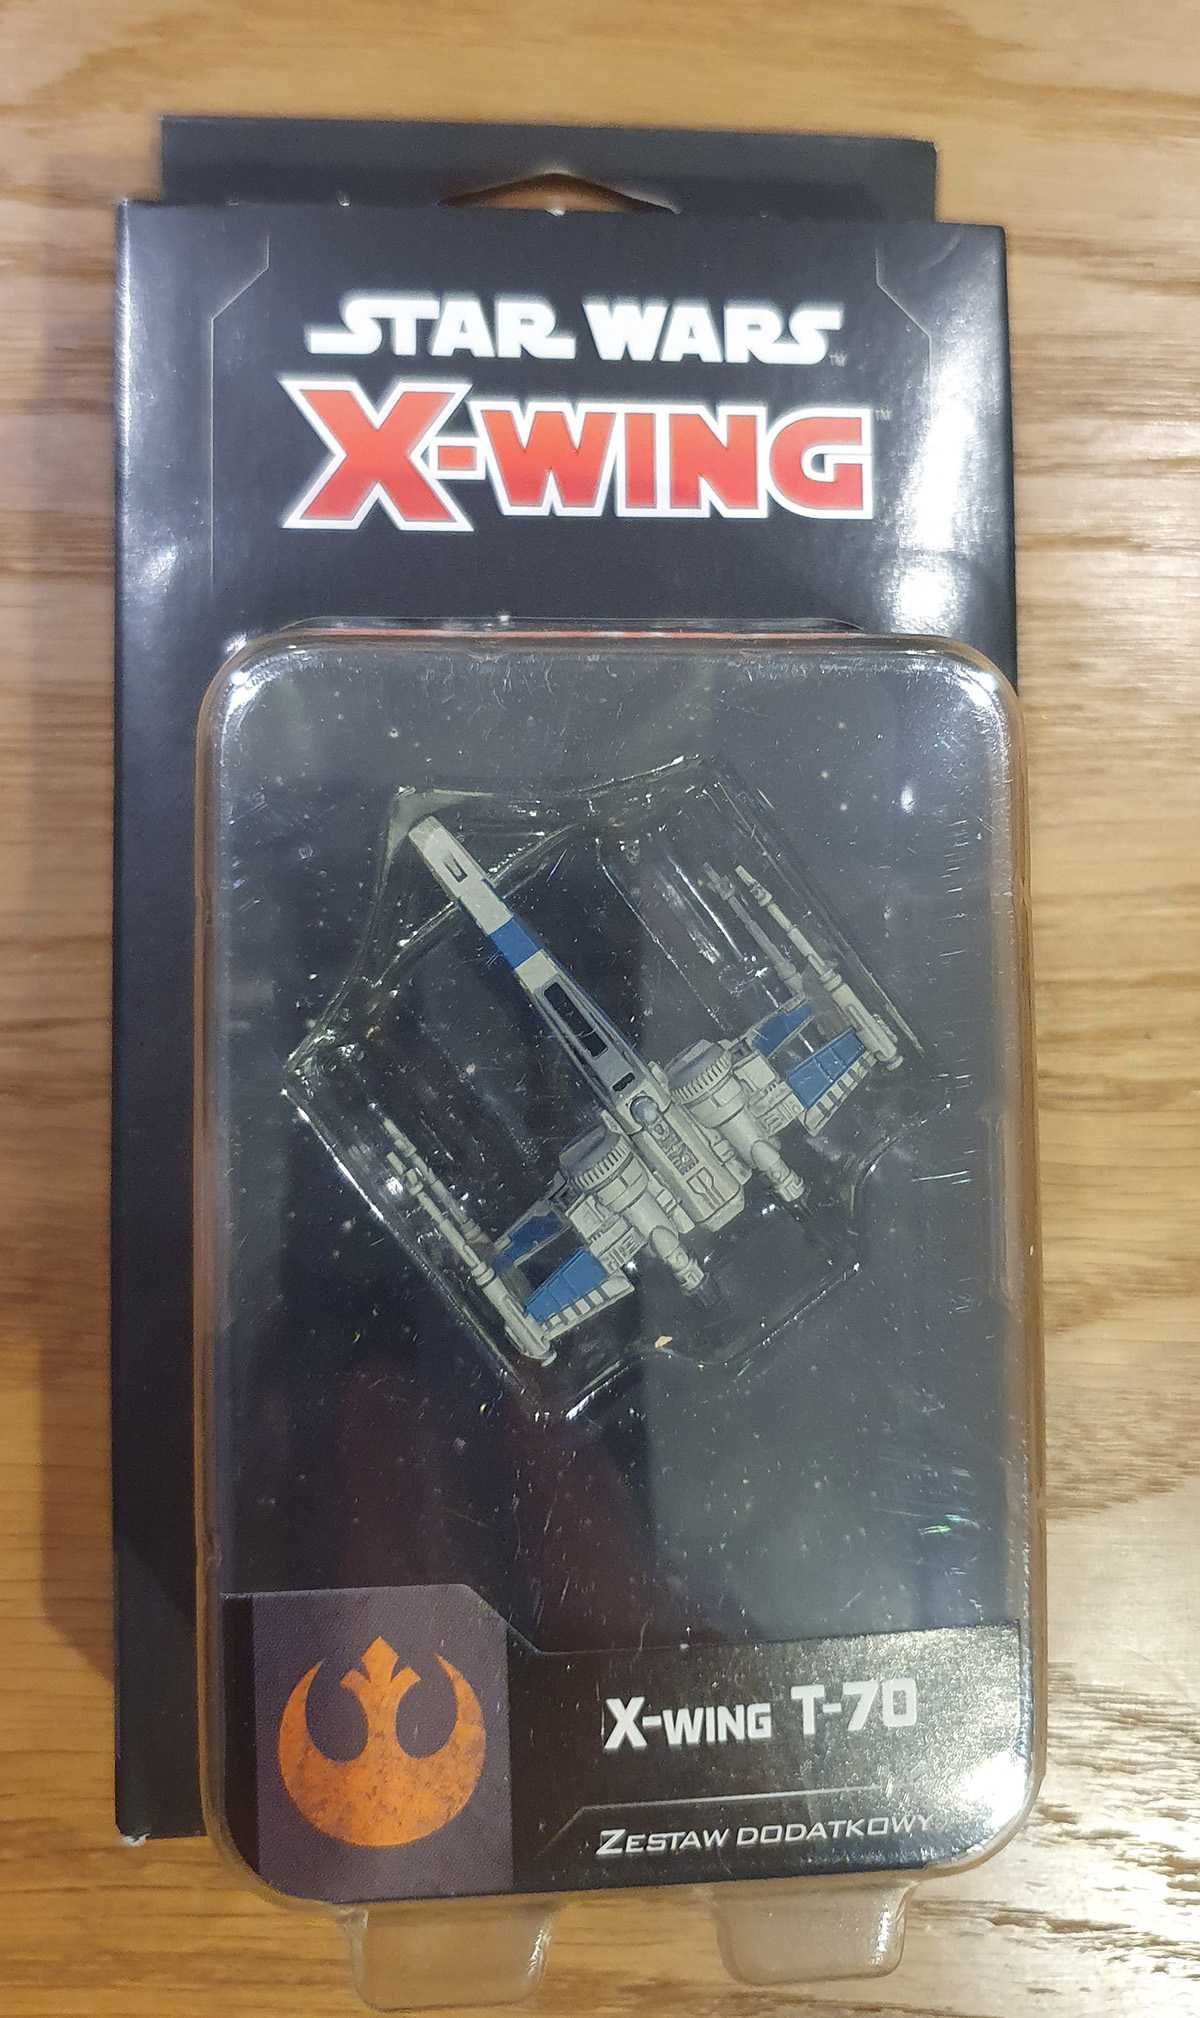 Star Wars: X-Wing - X-wing T-70 (druga edycja) Rebel